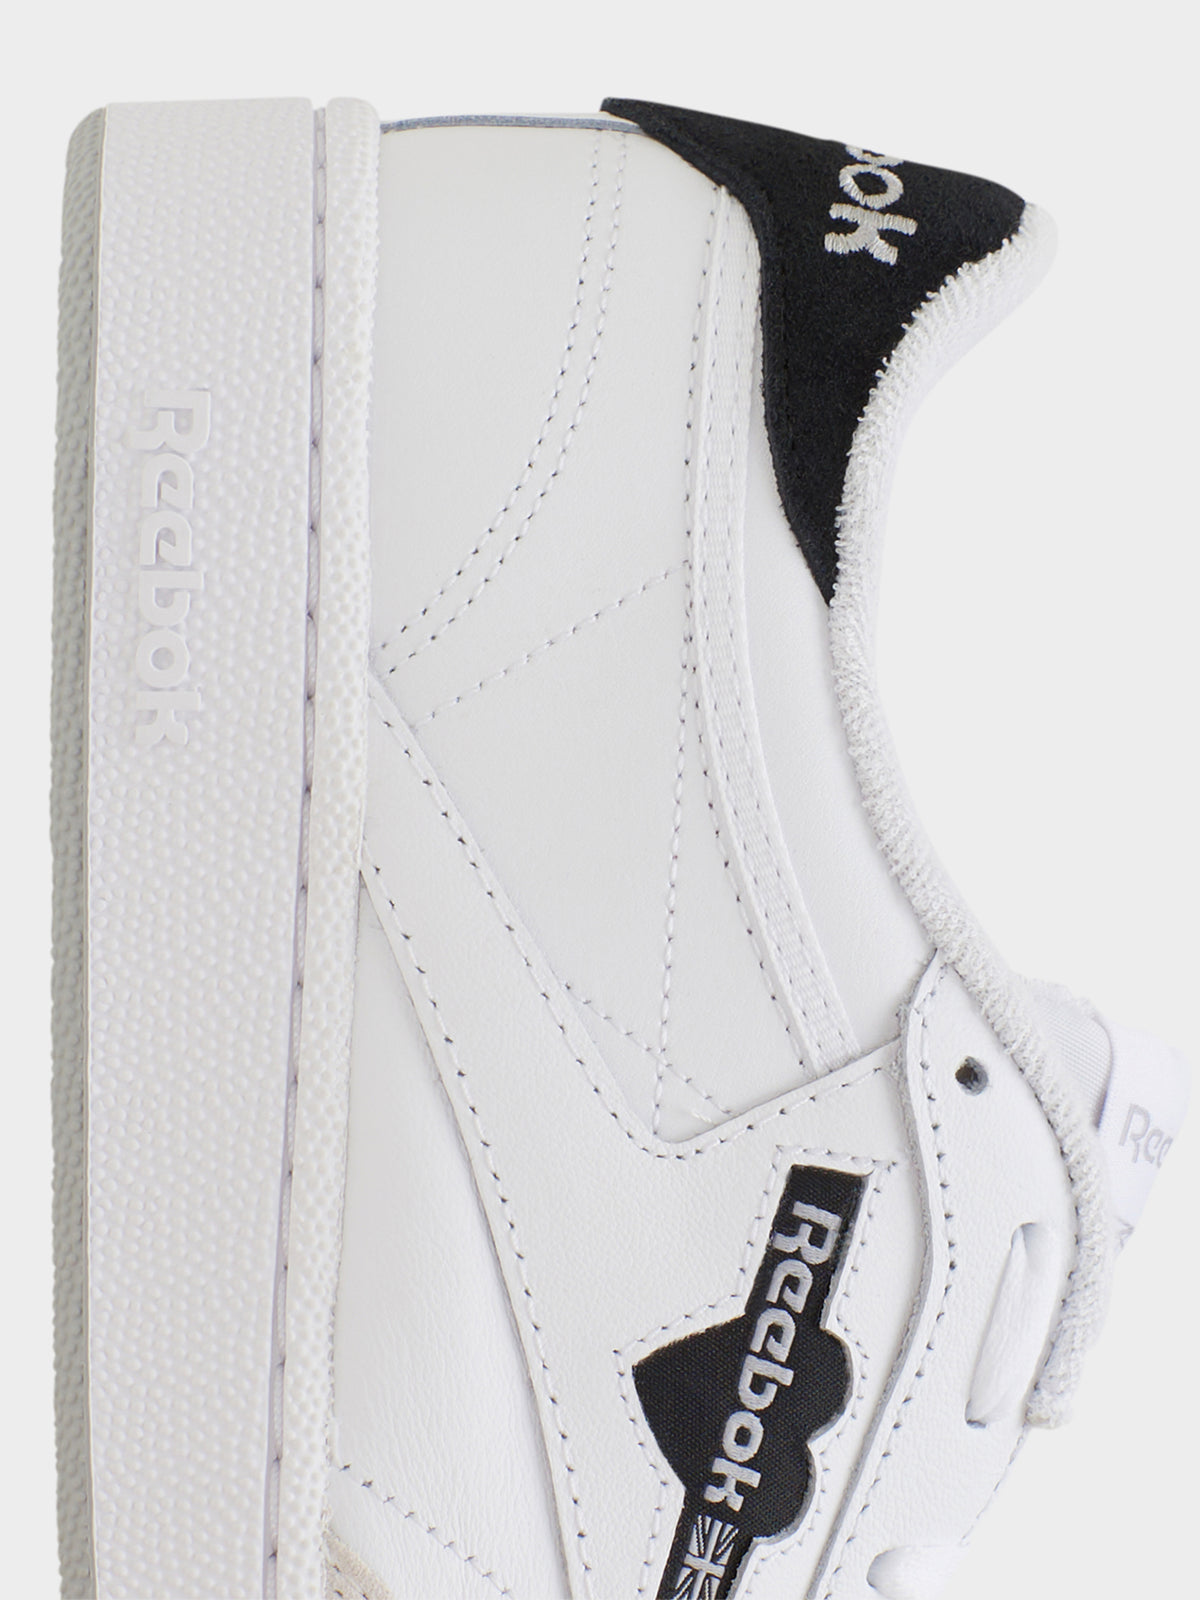 Unisex Club C 85 Sneakers in White &amp; Black